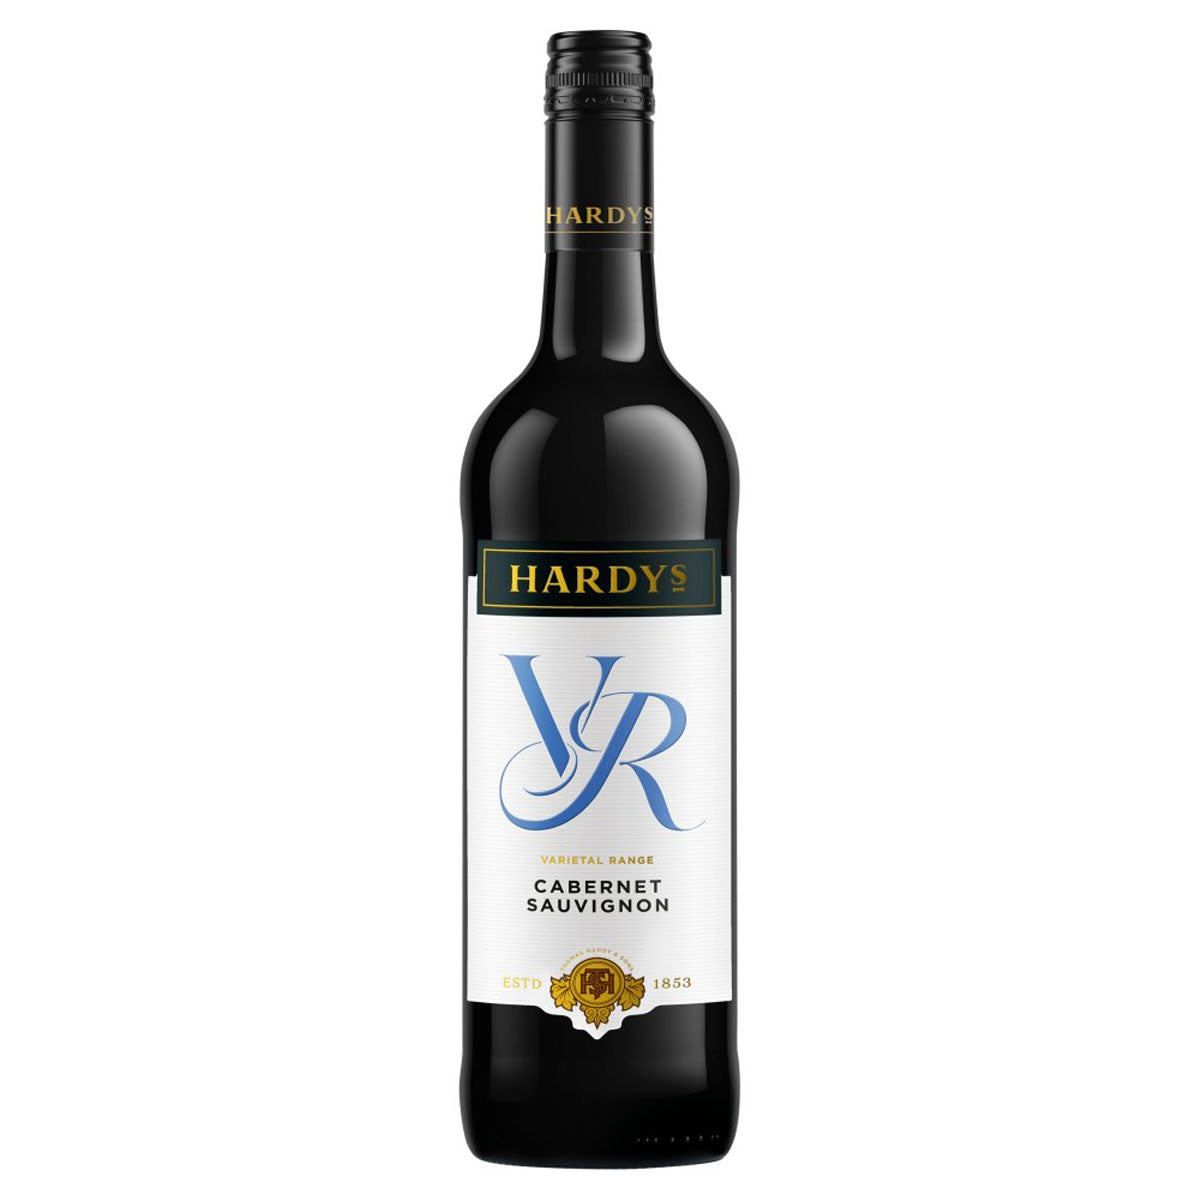 A bottle of Hardys - VR Cabernet Sauvignon (13.5% ABV) - 750ml.